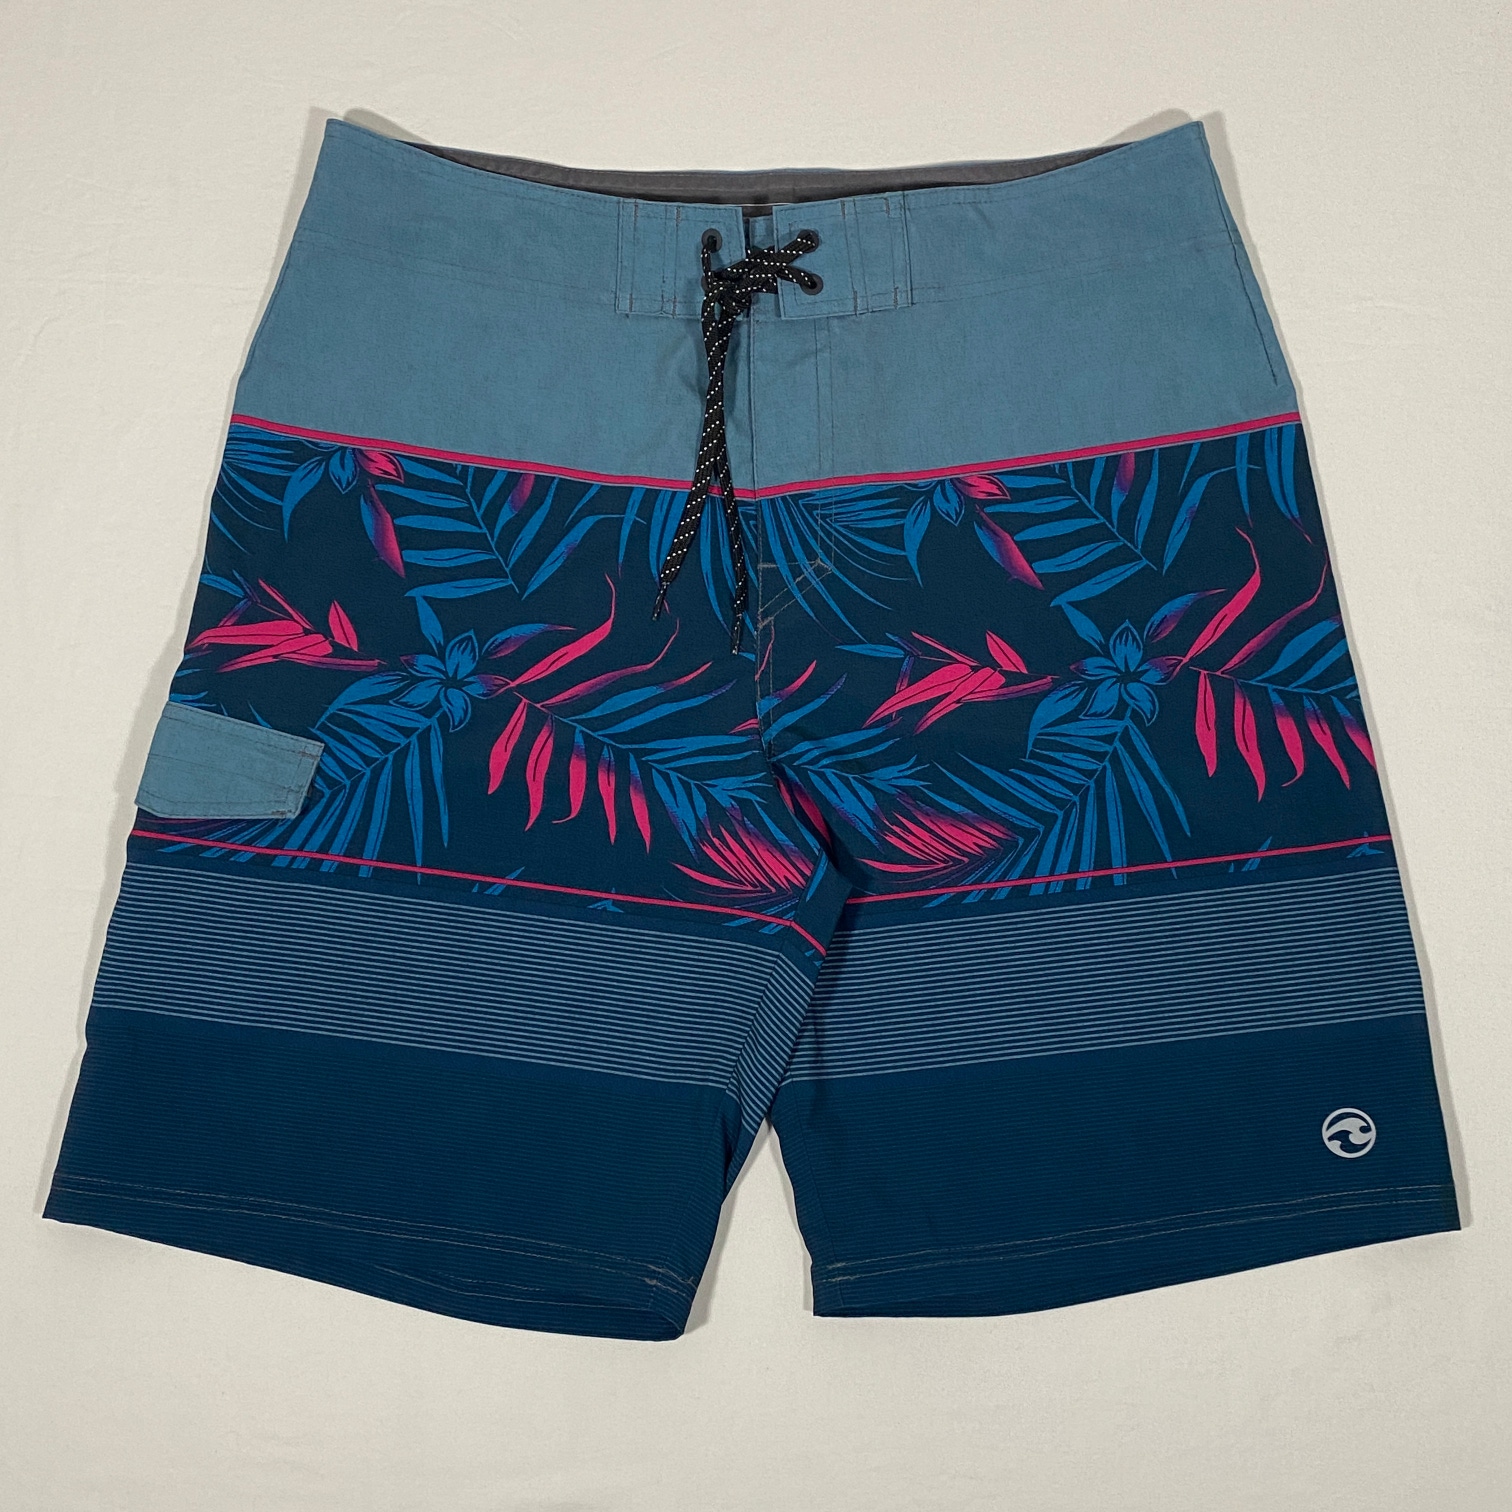 Ocean Current Men's Size 36 Flex Waist Blue/Multicolor Drawstring Board Shorts